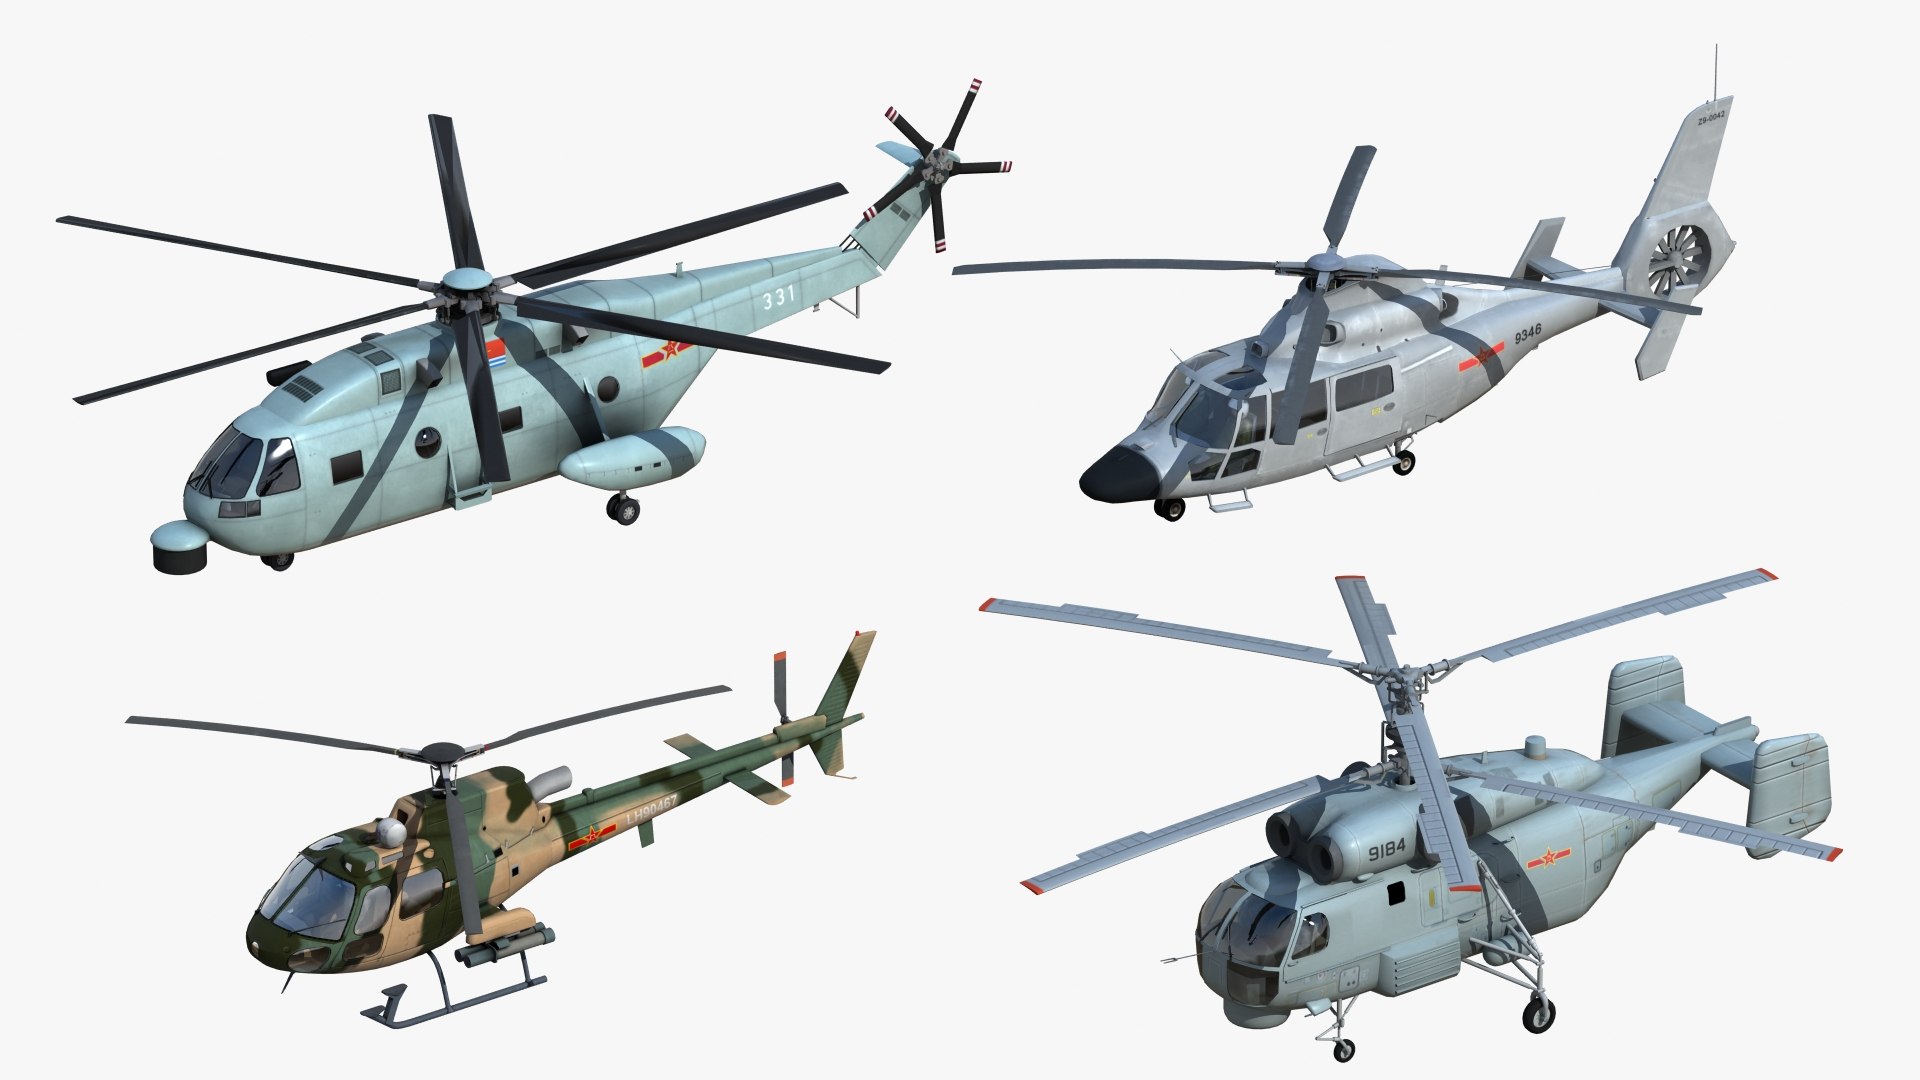 chinese military helicopters model https://p.turbosquid.com/ts-thumb/ui/KysFxp/vsjBtKMm/collectionx4_01/jpg/1593263165/1920x1080/fit_q87/6e94230f068b5c6c334b7eb77426be9ce4afd6ab/collectionx4_01.jpg